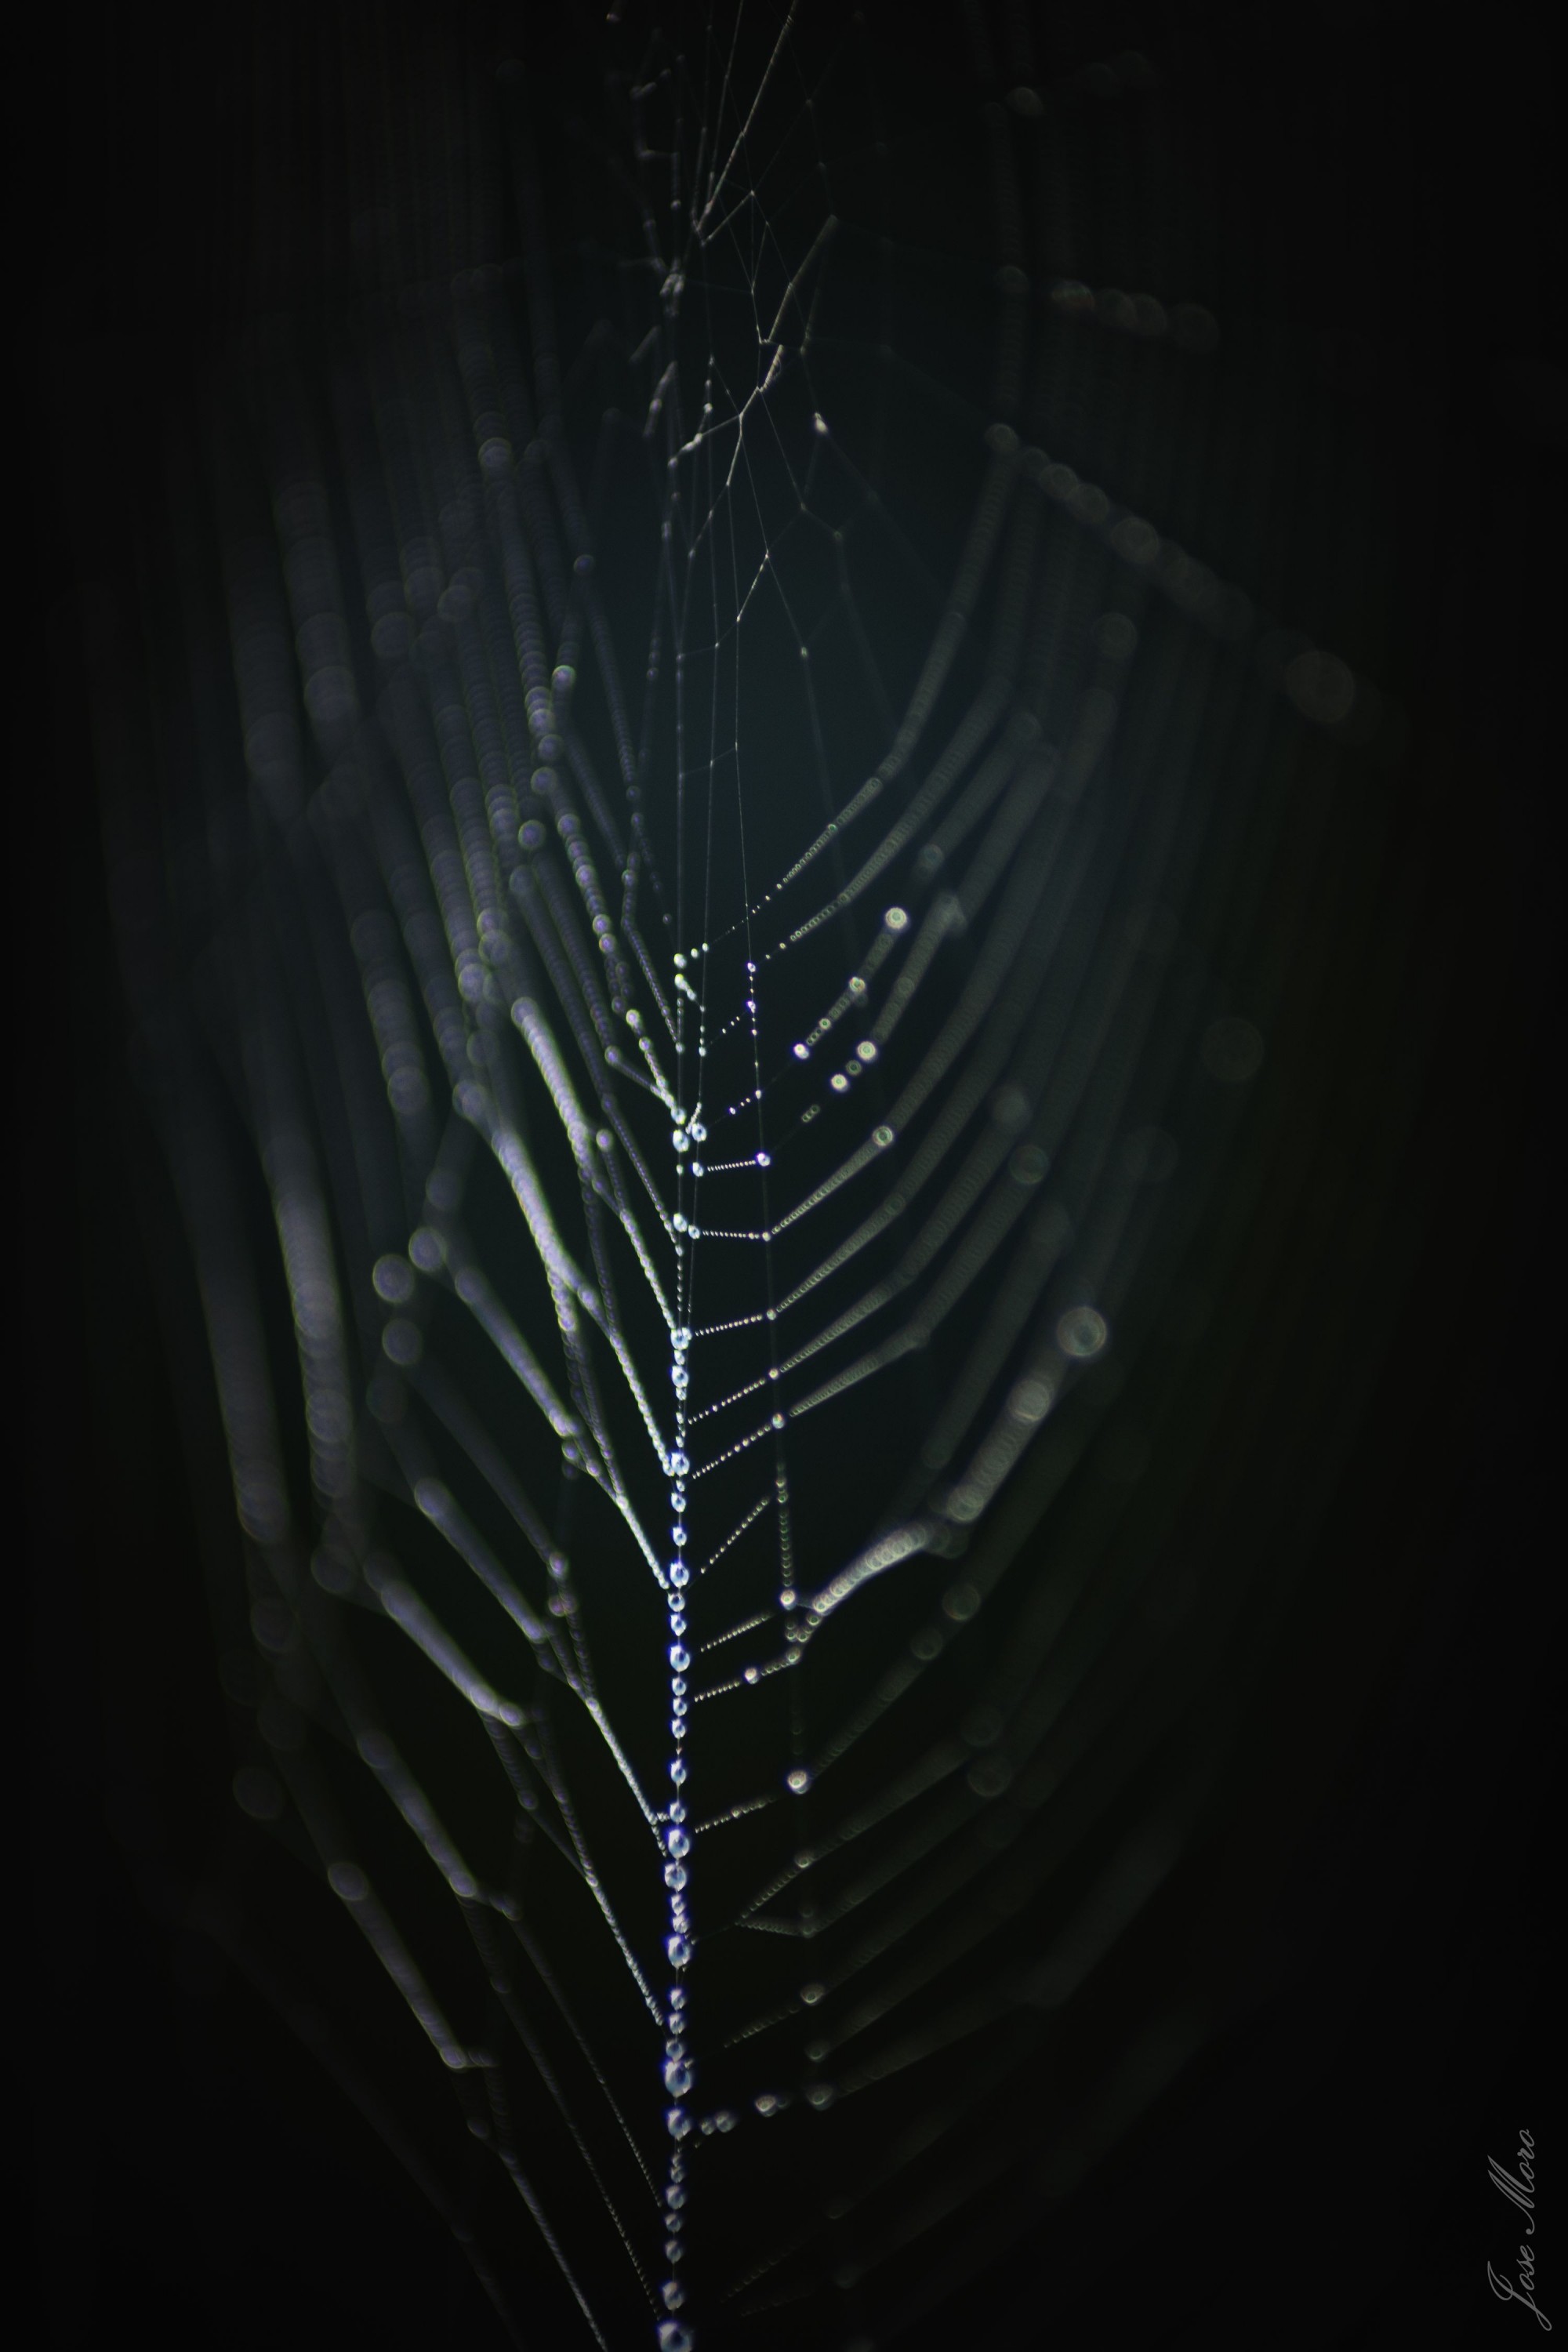 spidernet3 (1 de 1)